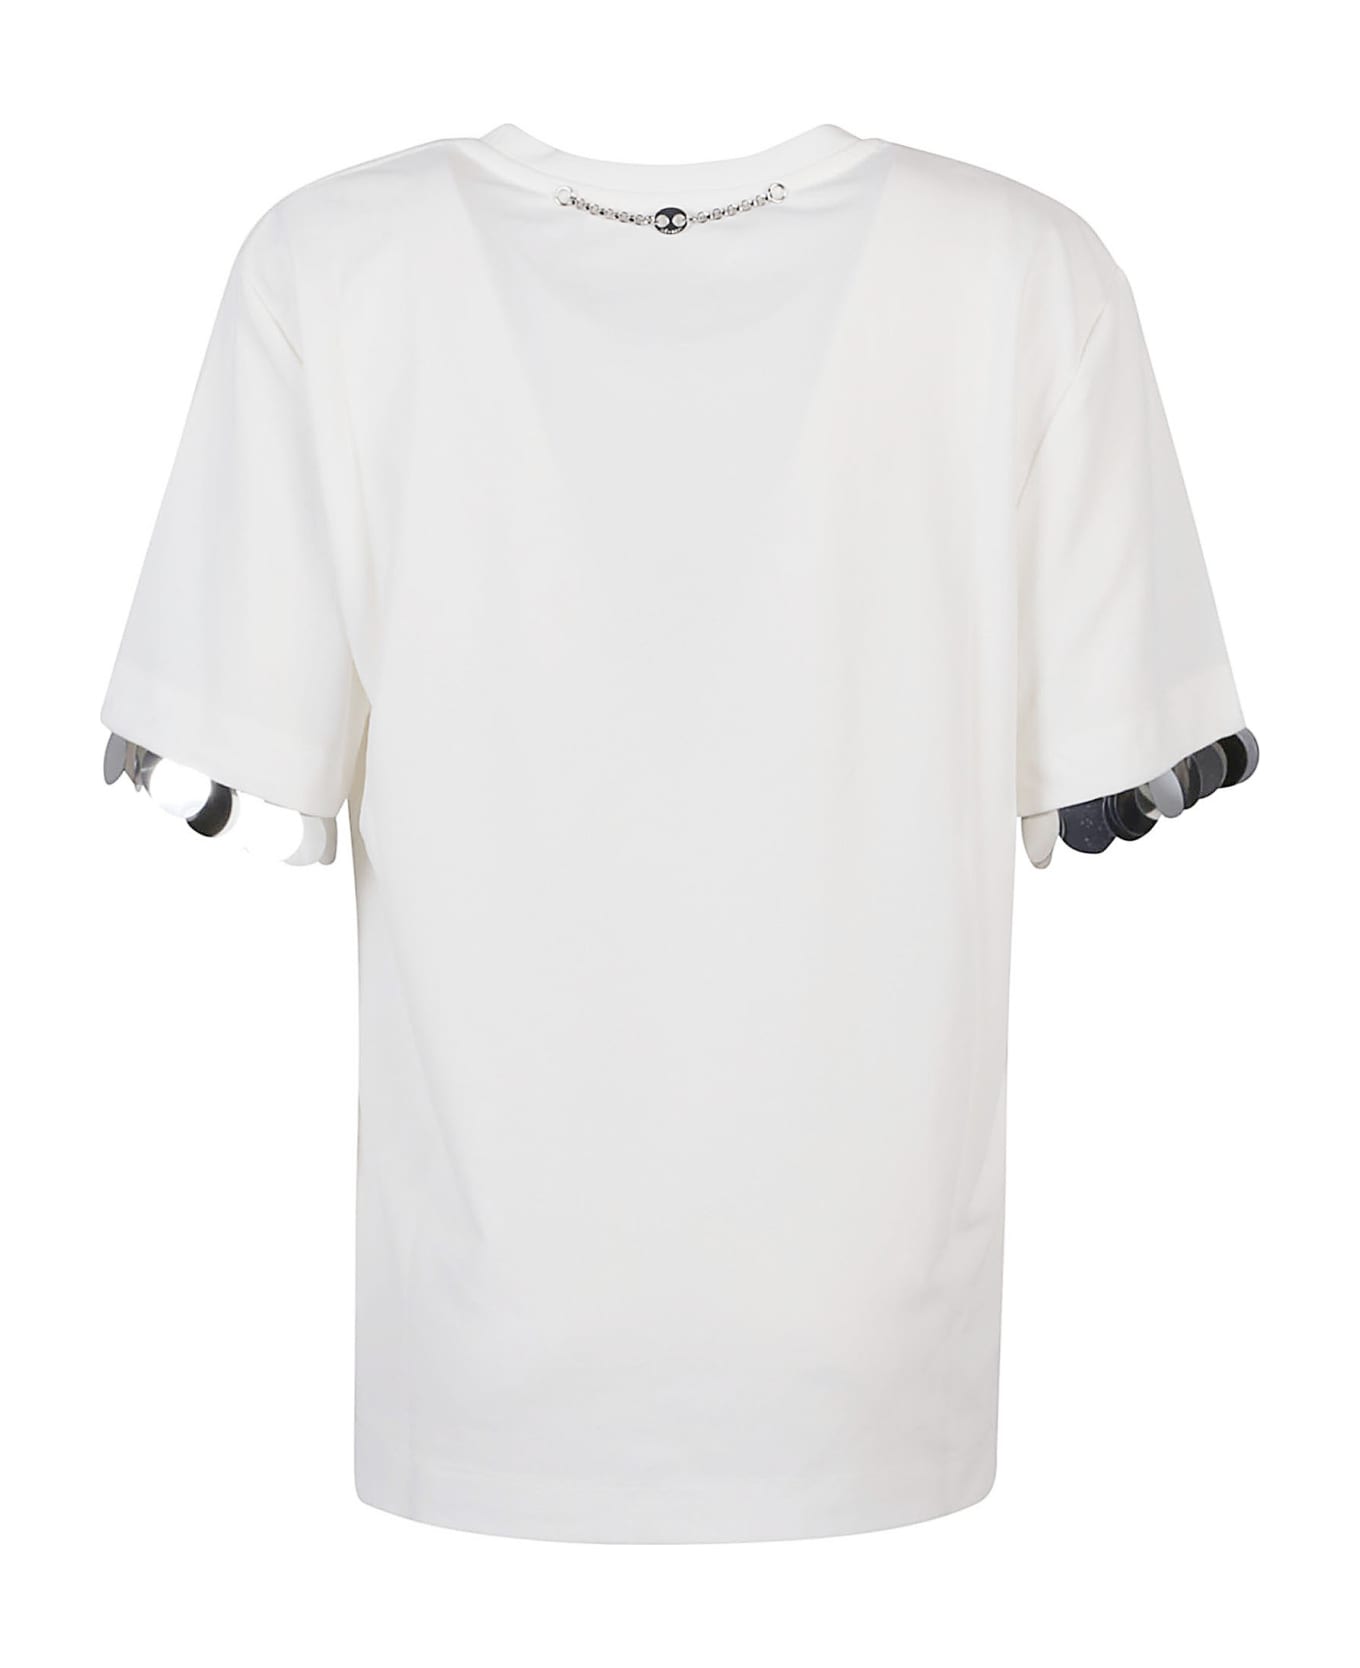 Paco Rabanne T-shirt - White Tシャツ